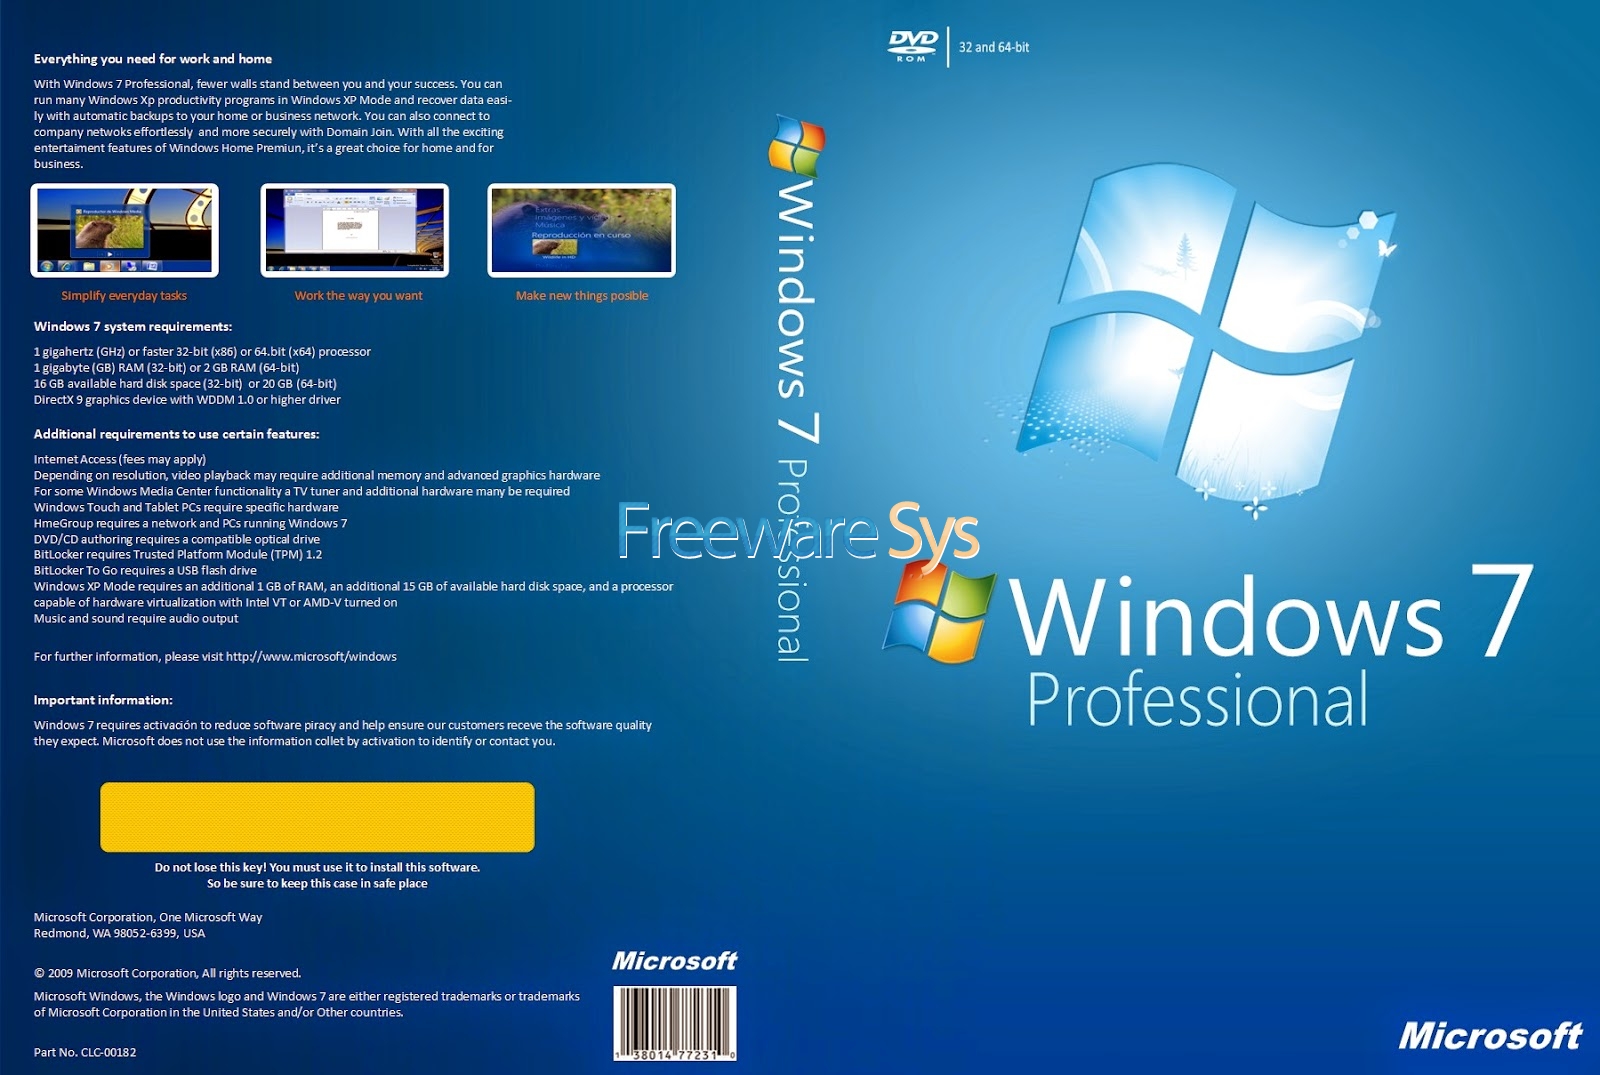 windows 7 pro oa lenovo singapore iso download